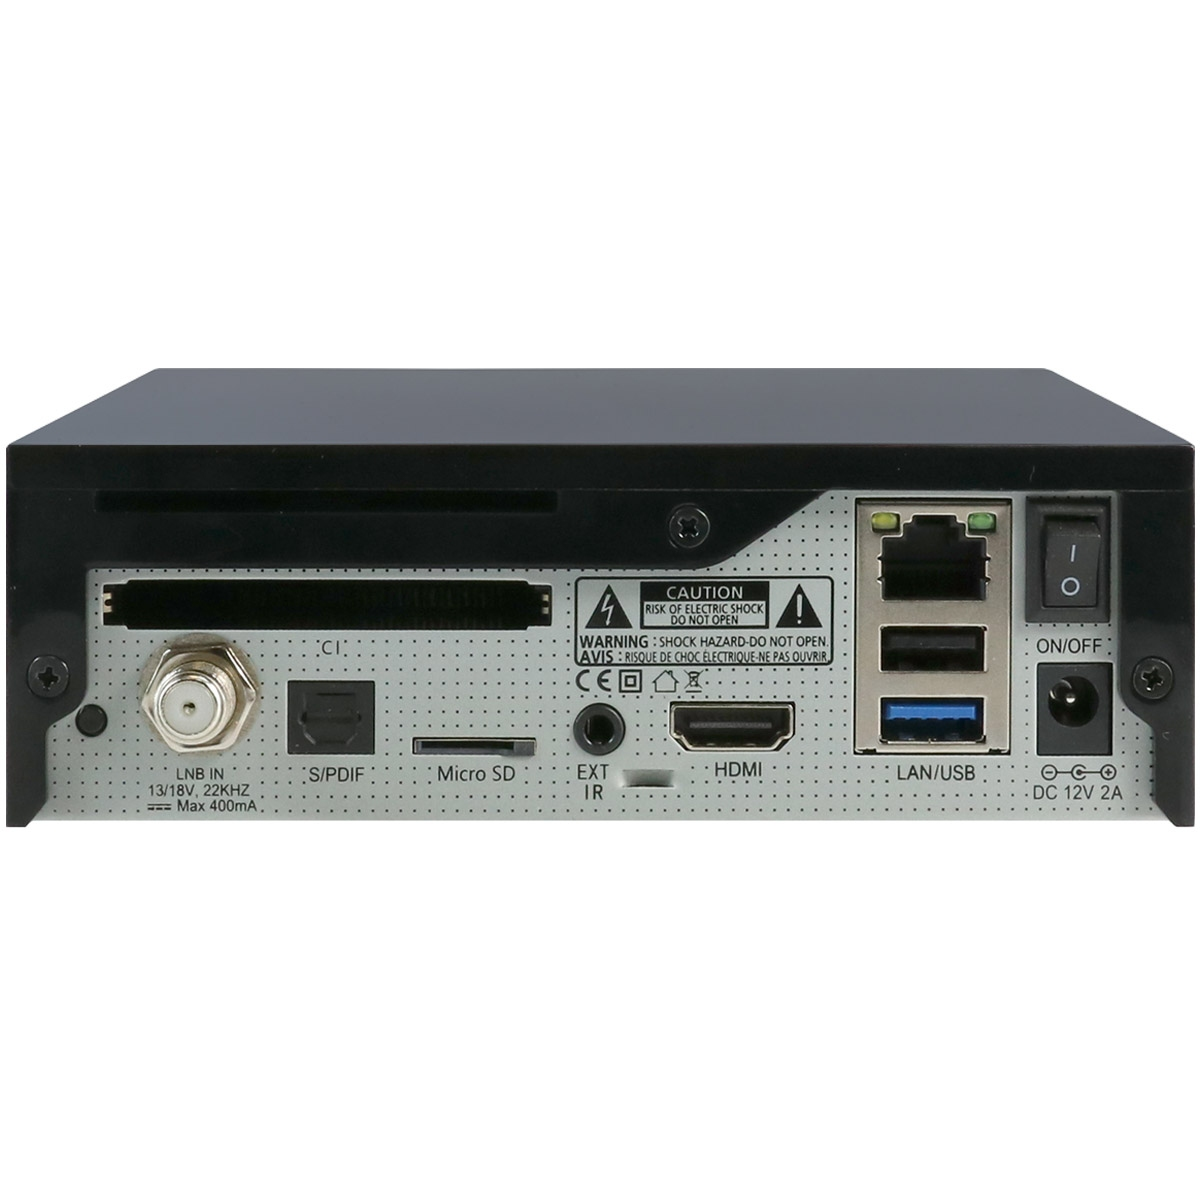 AB-COM PULSe 4K HDR10 E2 UHD 64GB CI 4K Sat Receiver MicroSD (PVR-Funktion=optional, Sat-Receiver LAN Mini 1xDVB-S2X UHD schwarz) Linux